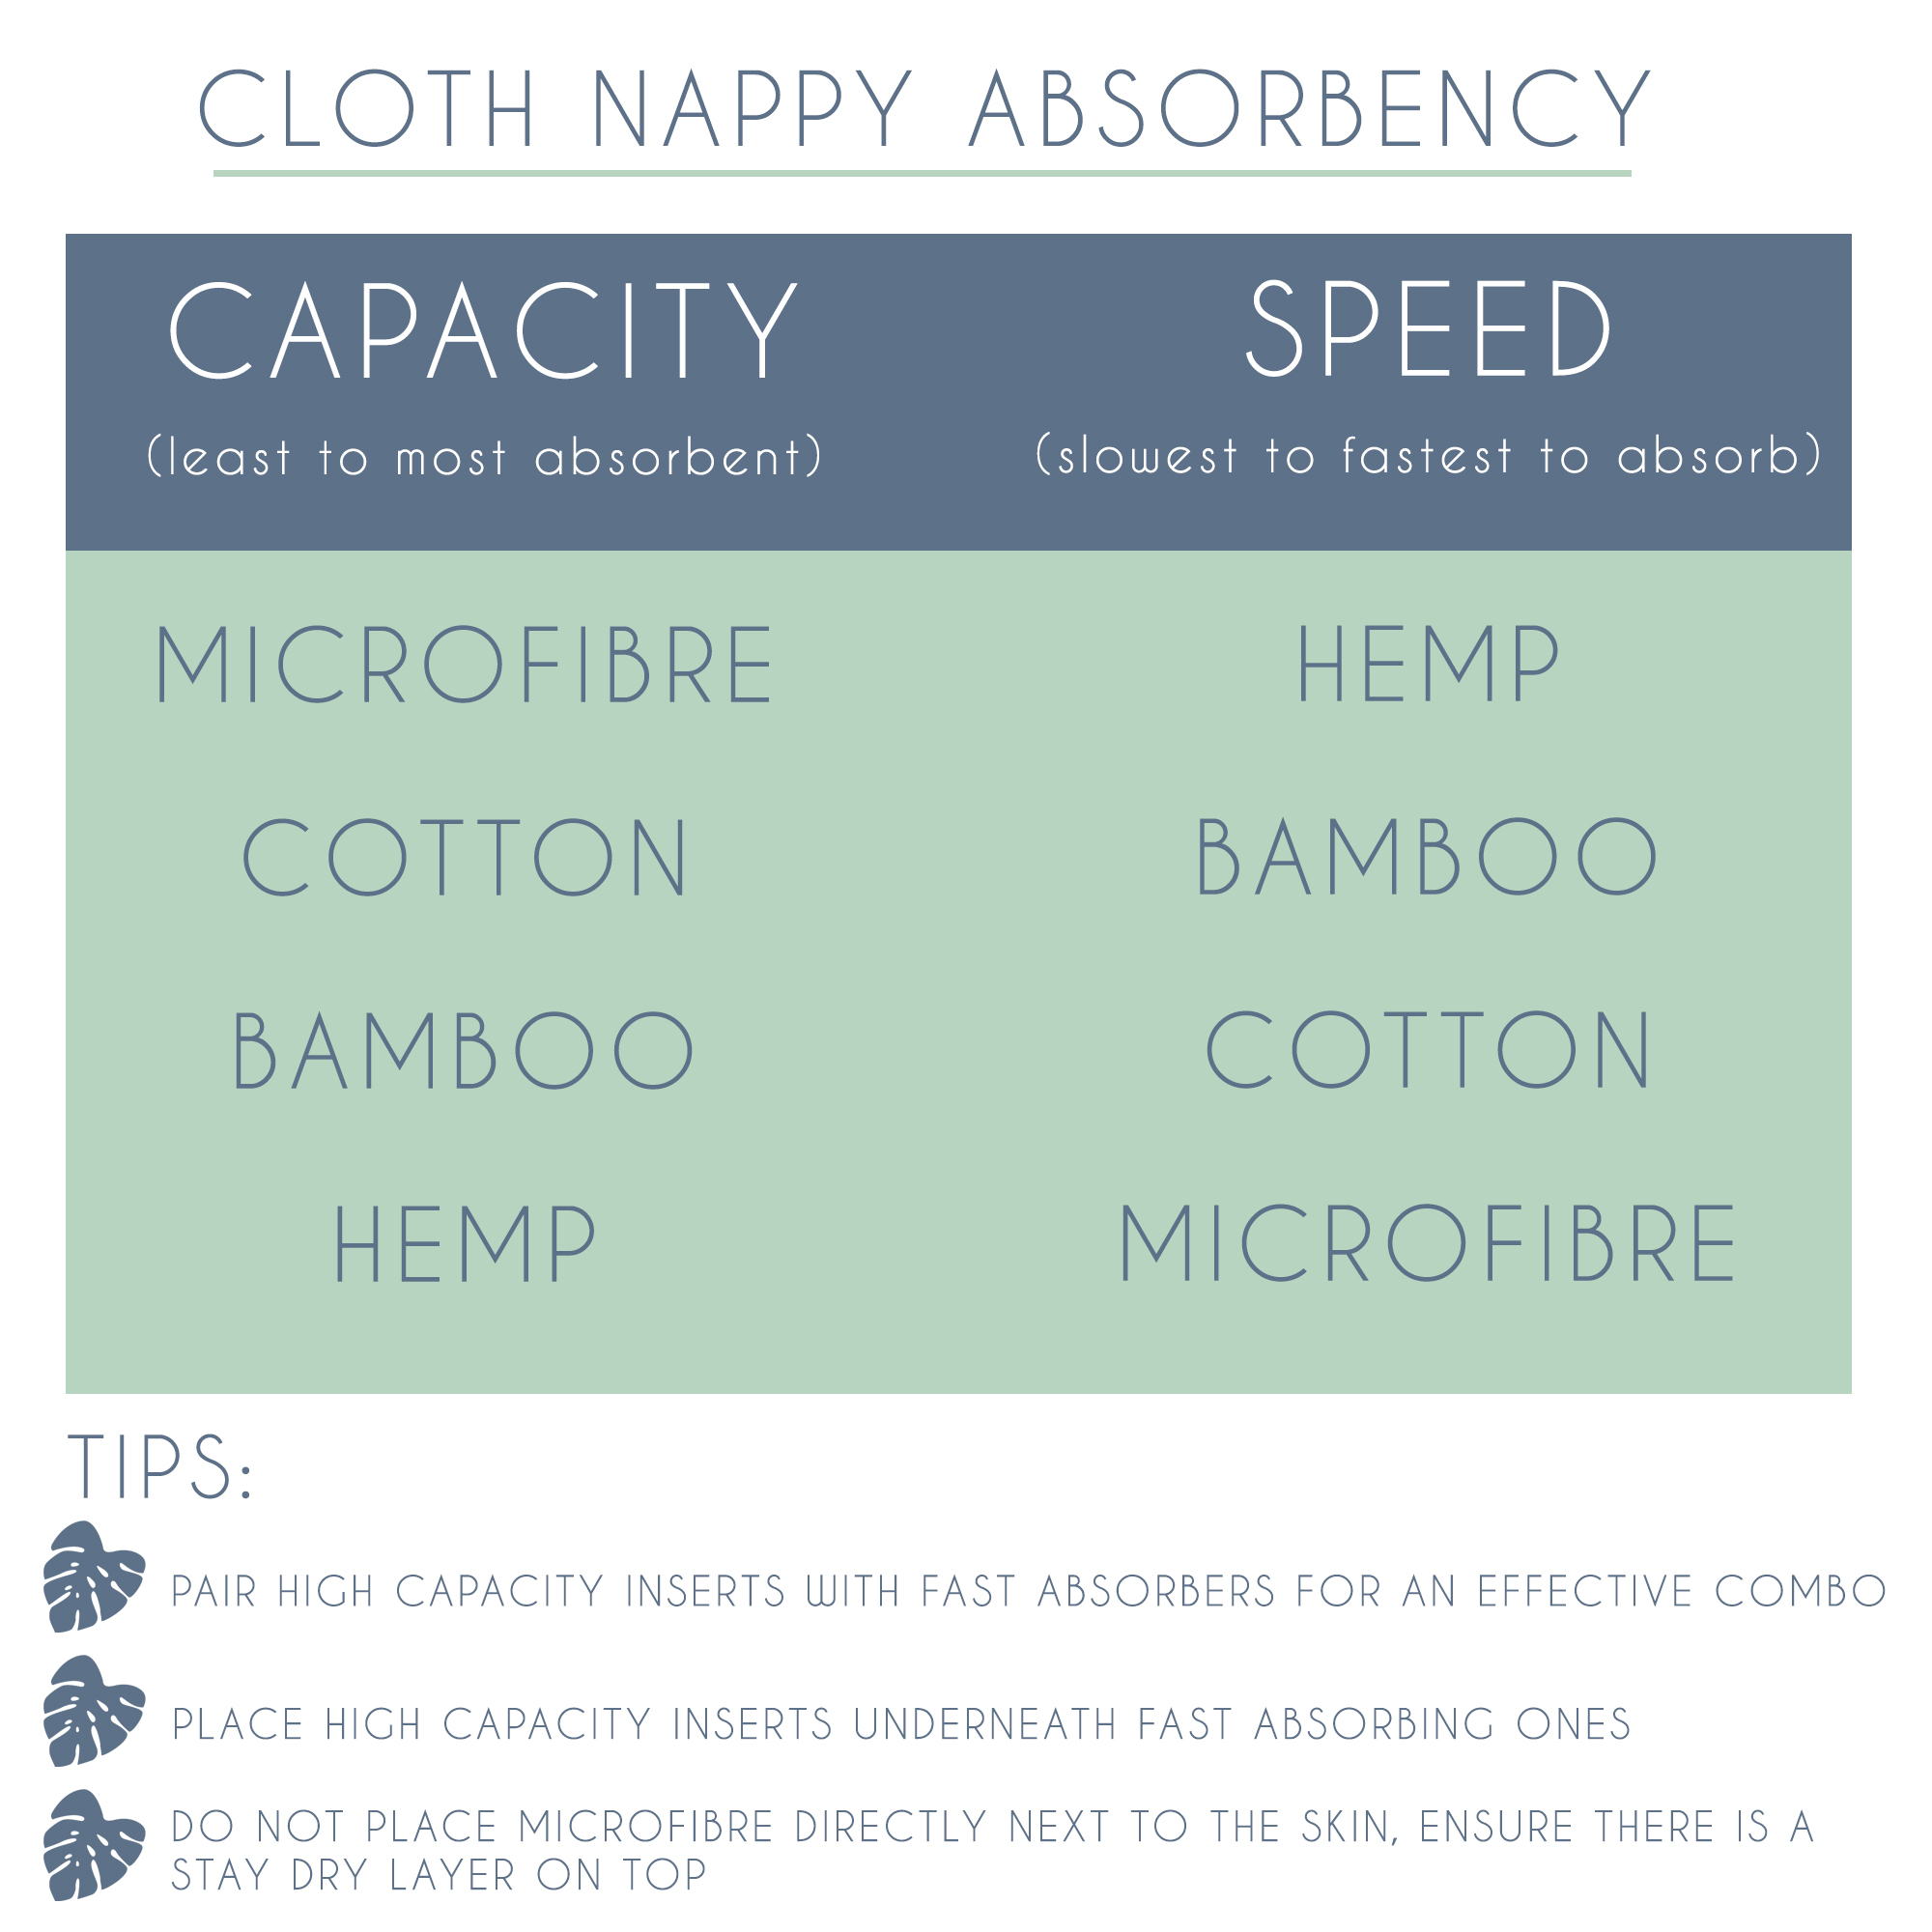 Cloth nappy fibre absorbency guide